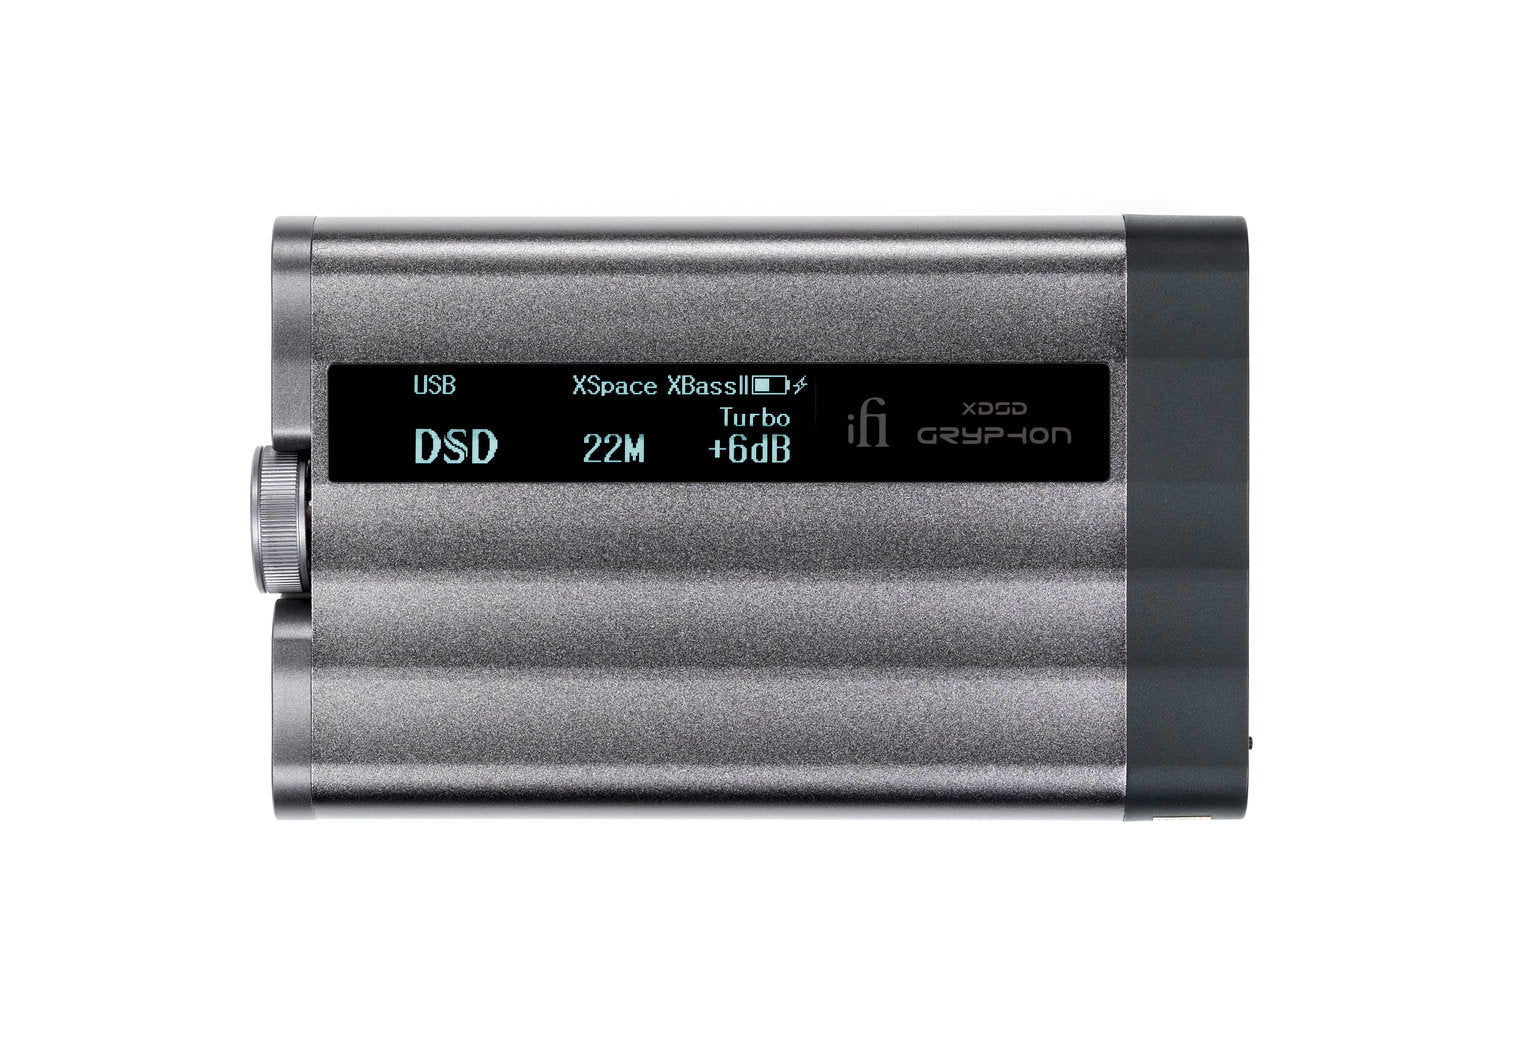 iFi xDSD Gryphon DAC/headphone amplifier